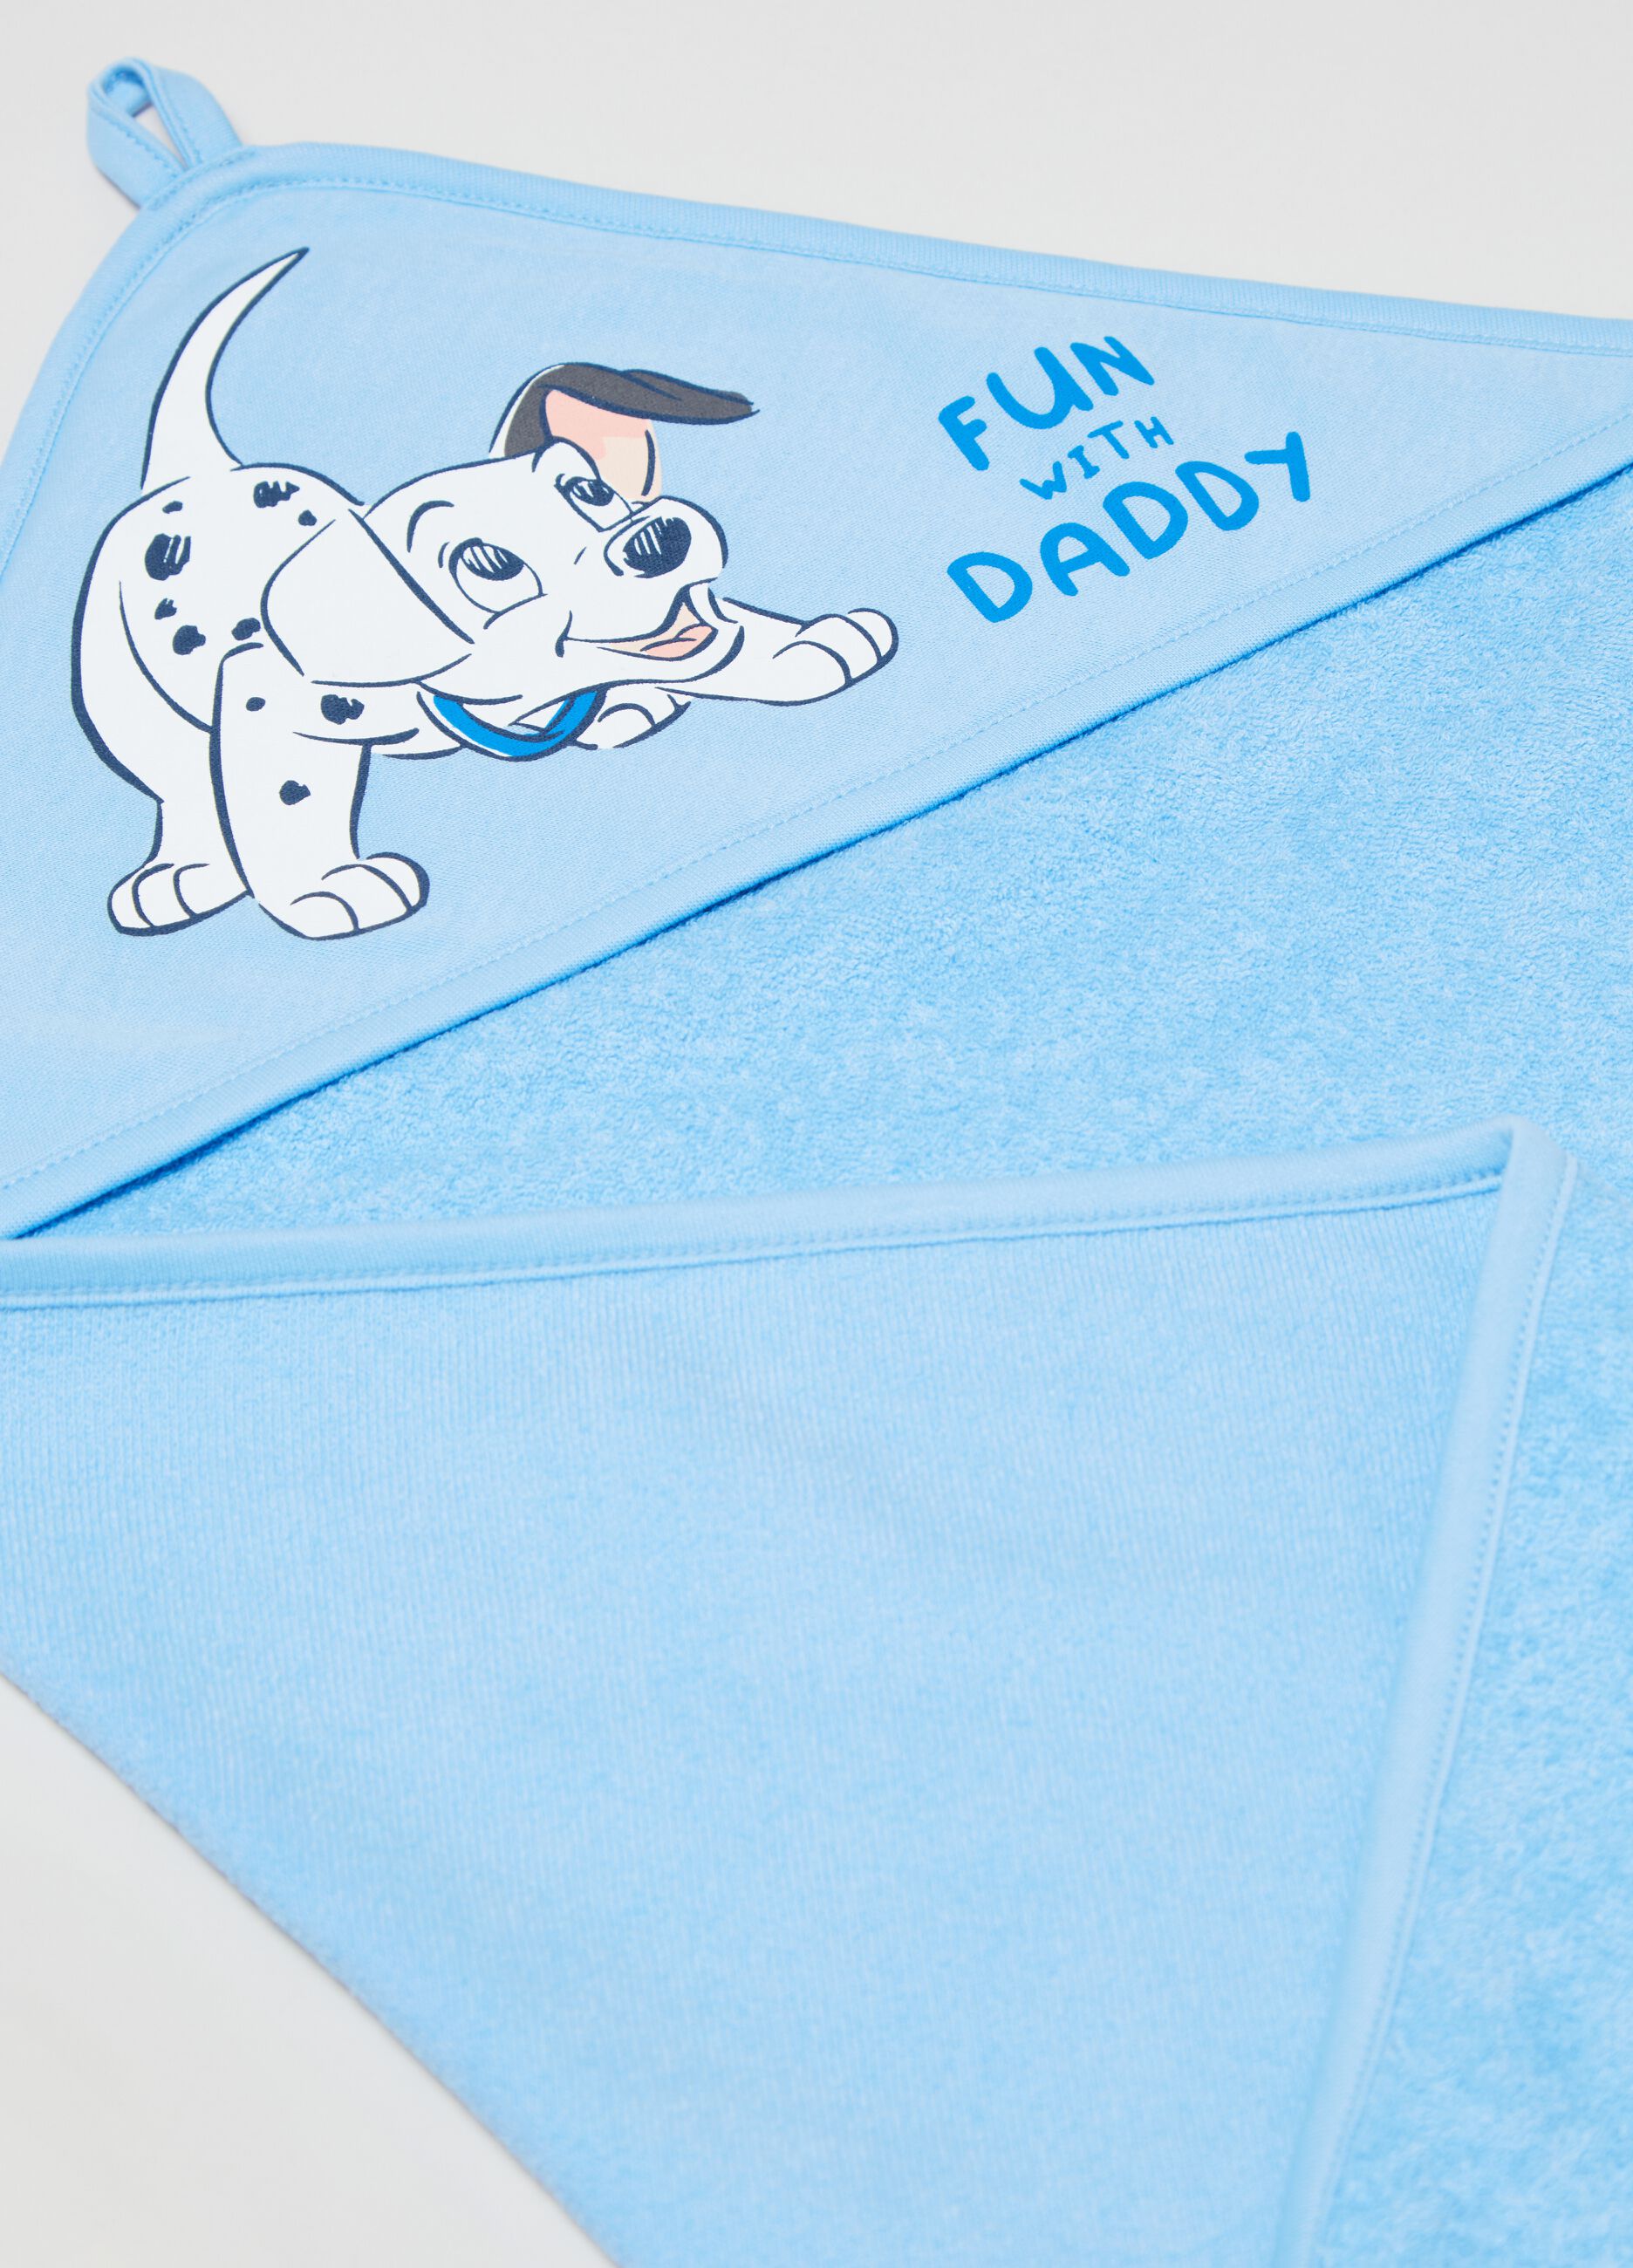 Disney Baby 101 Dalmatians bathrobe